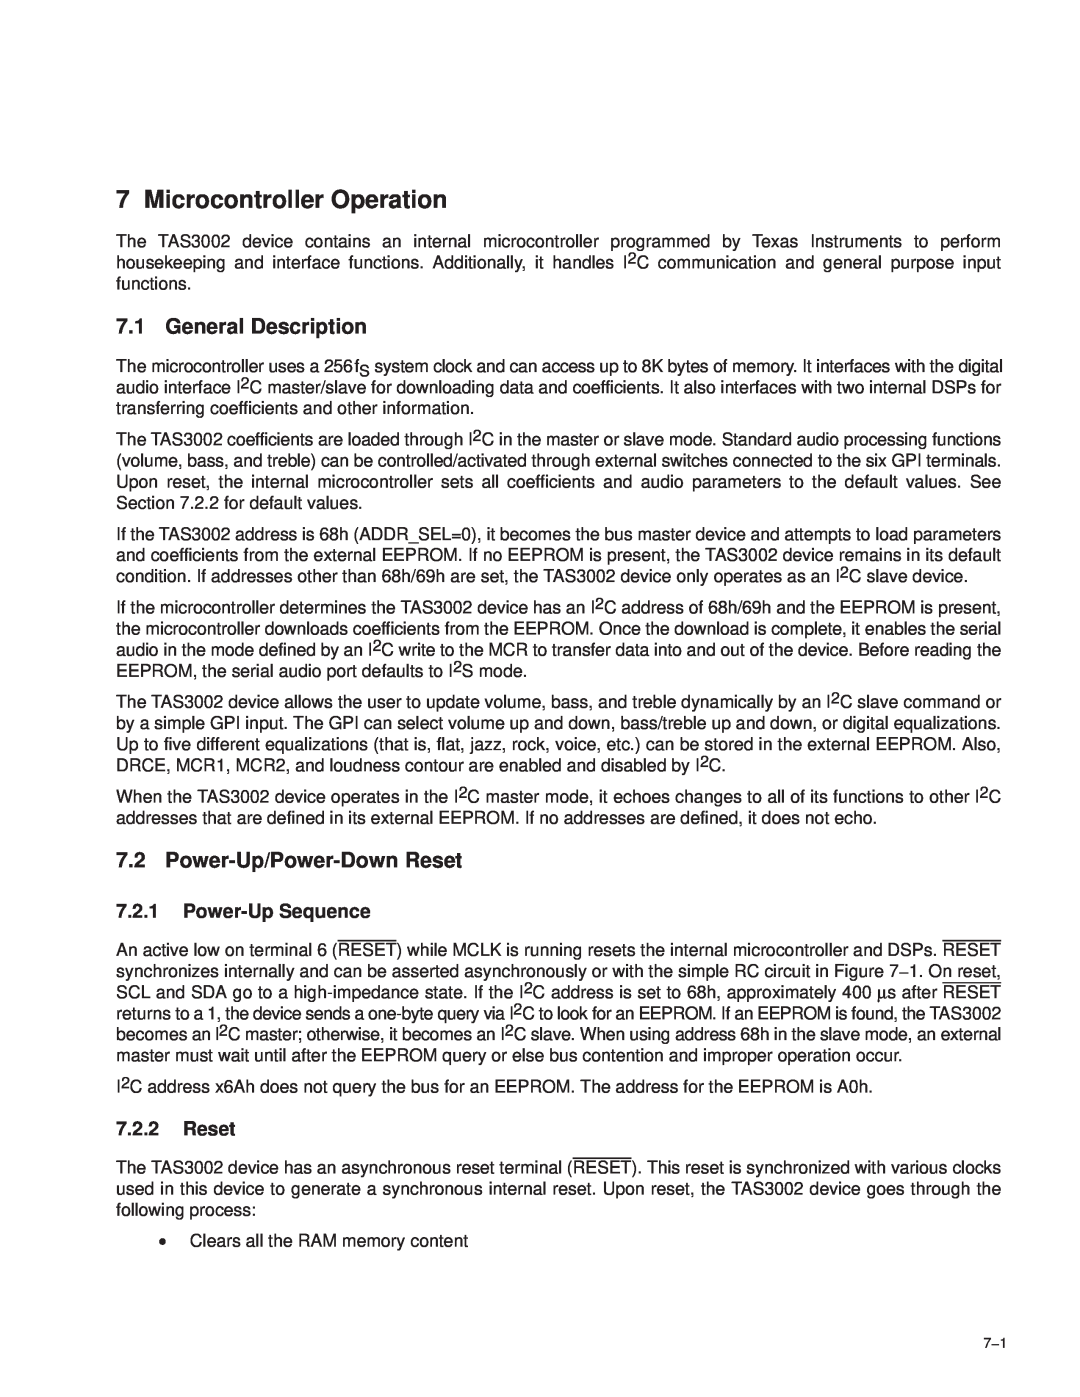 Texas Instruments TAS3002 Microcontroller Operation, General Description, Power-Up/Power-DownReset, 7.2.1Power-UpSequence 